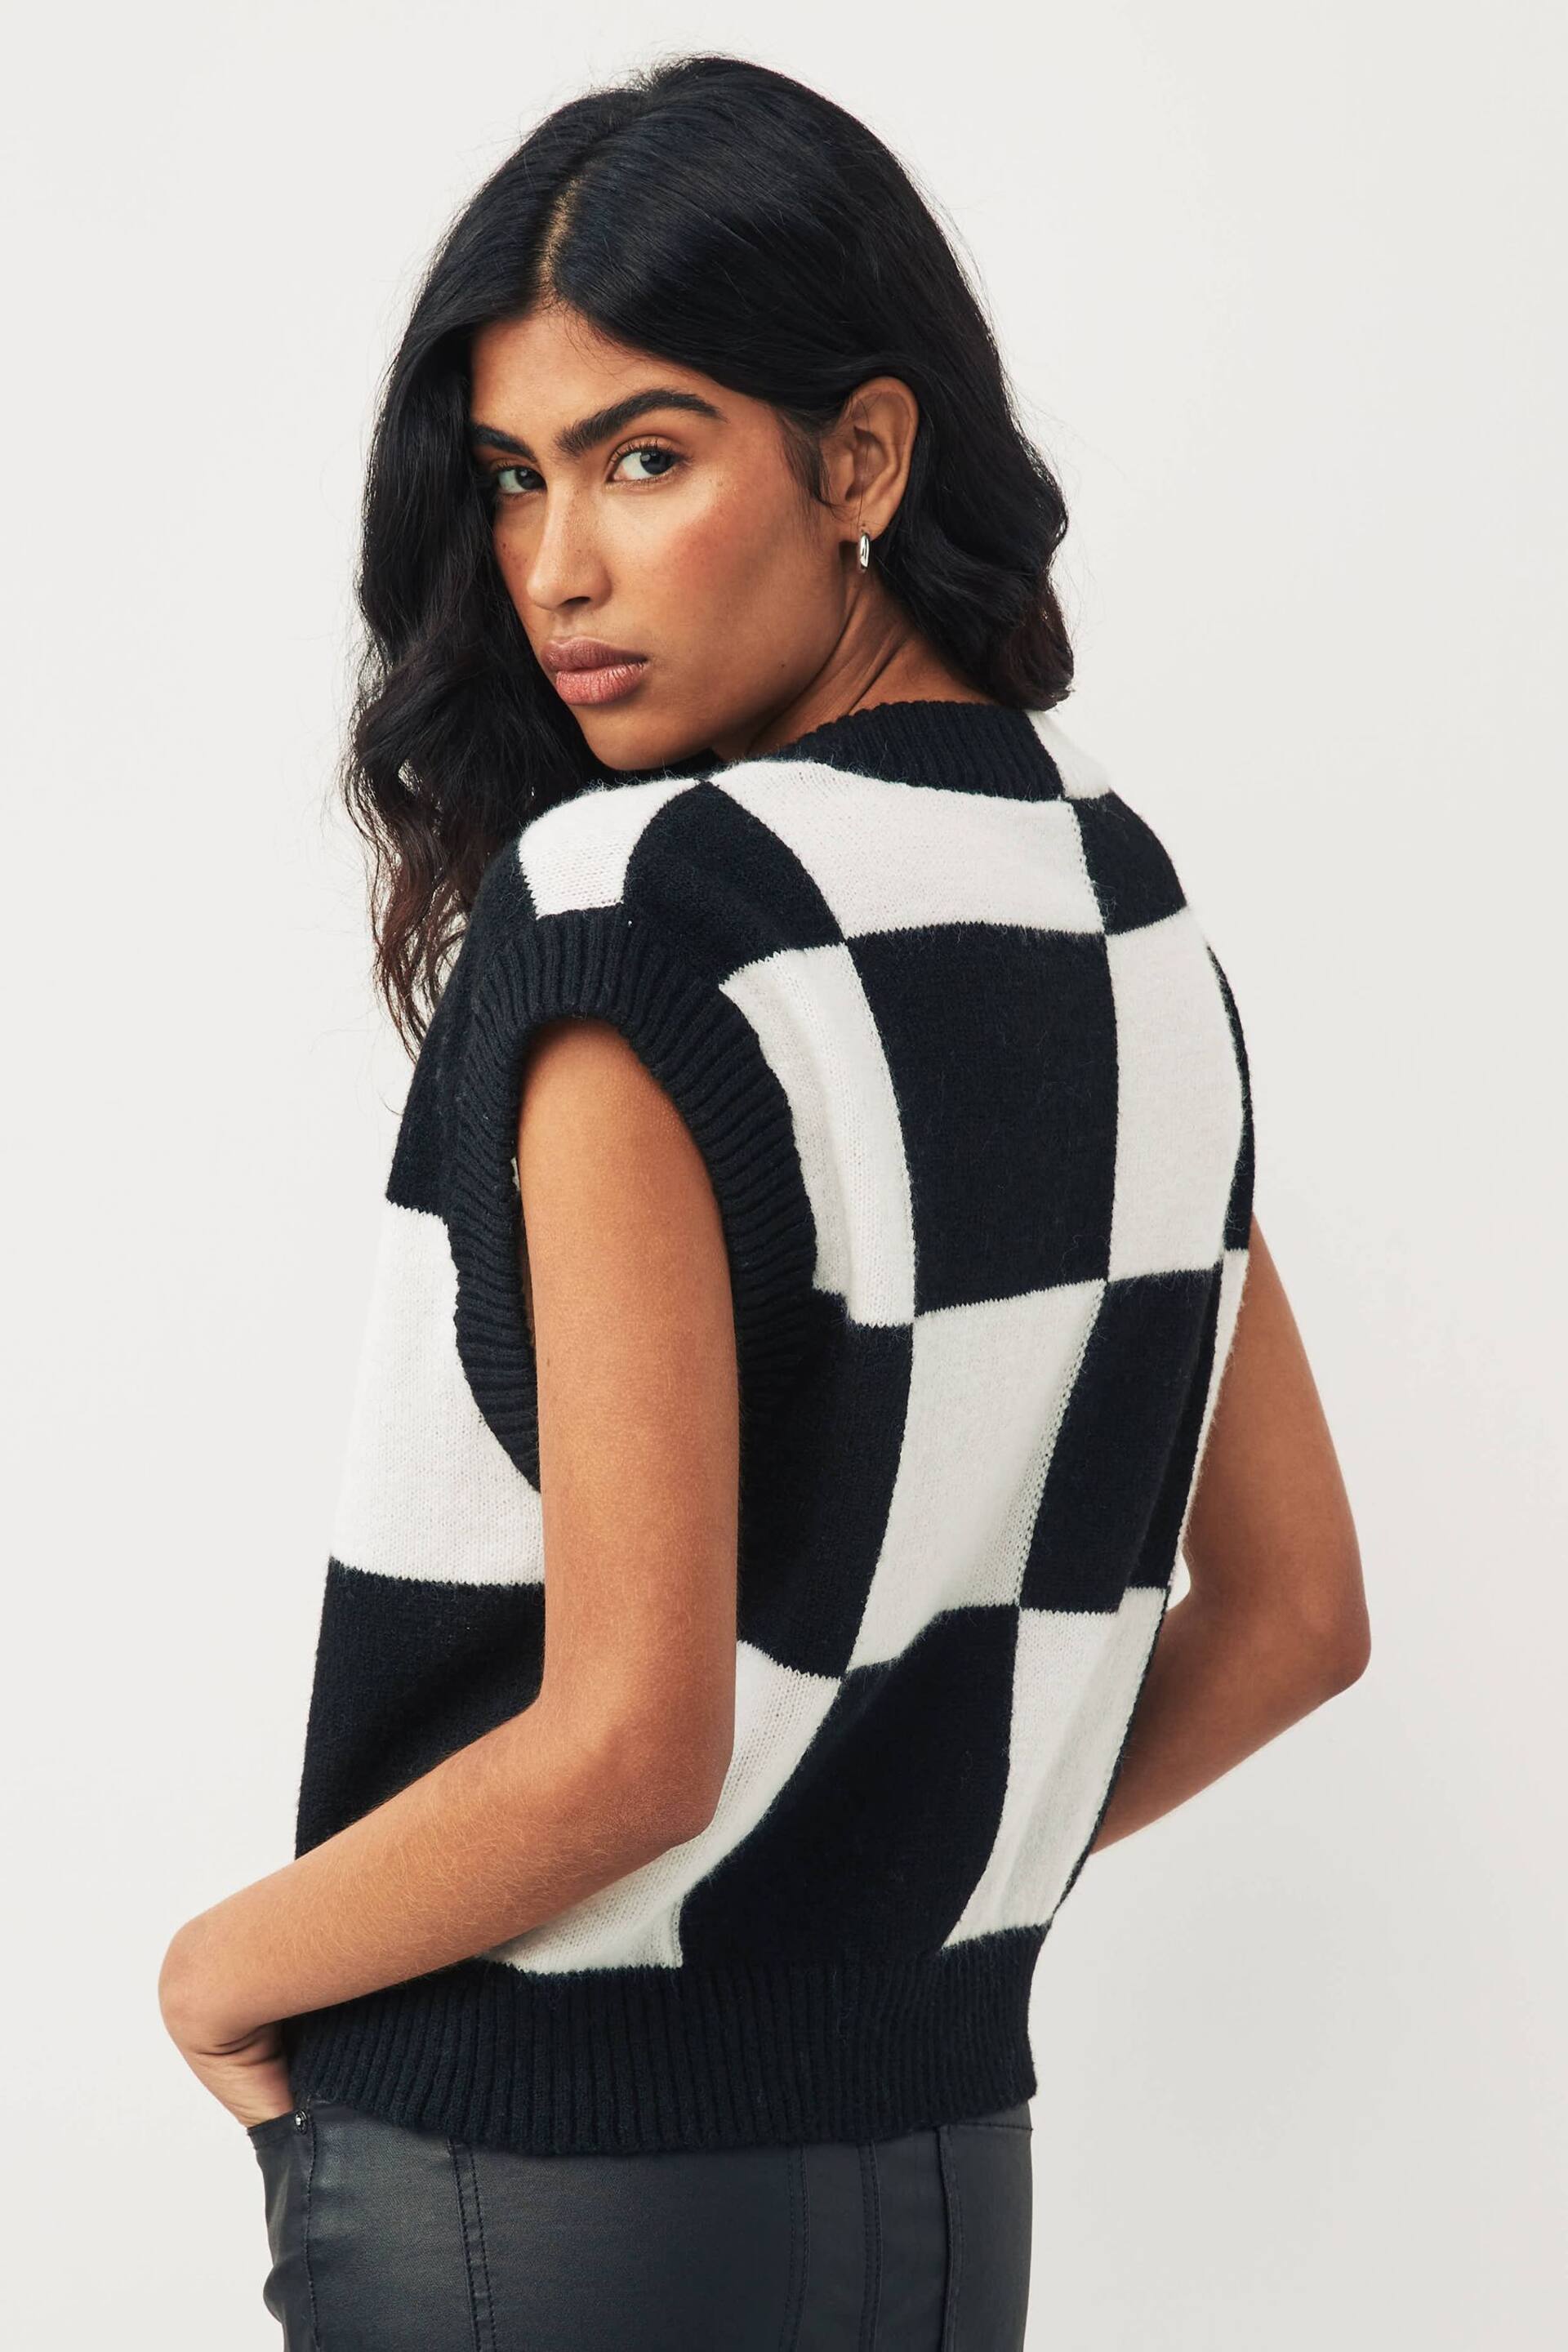 VERO MODA Black Checkerboard Print Sleeveless Knitted Vest - Image 2 of 4